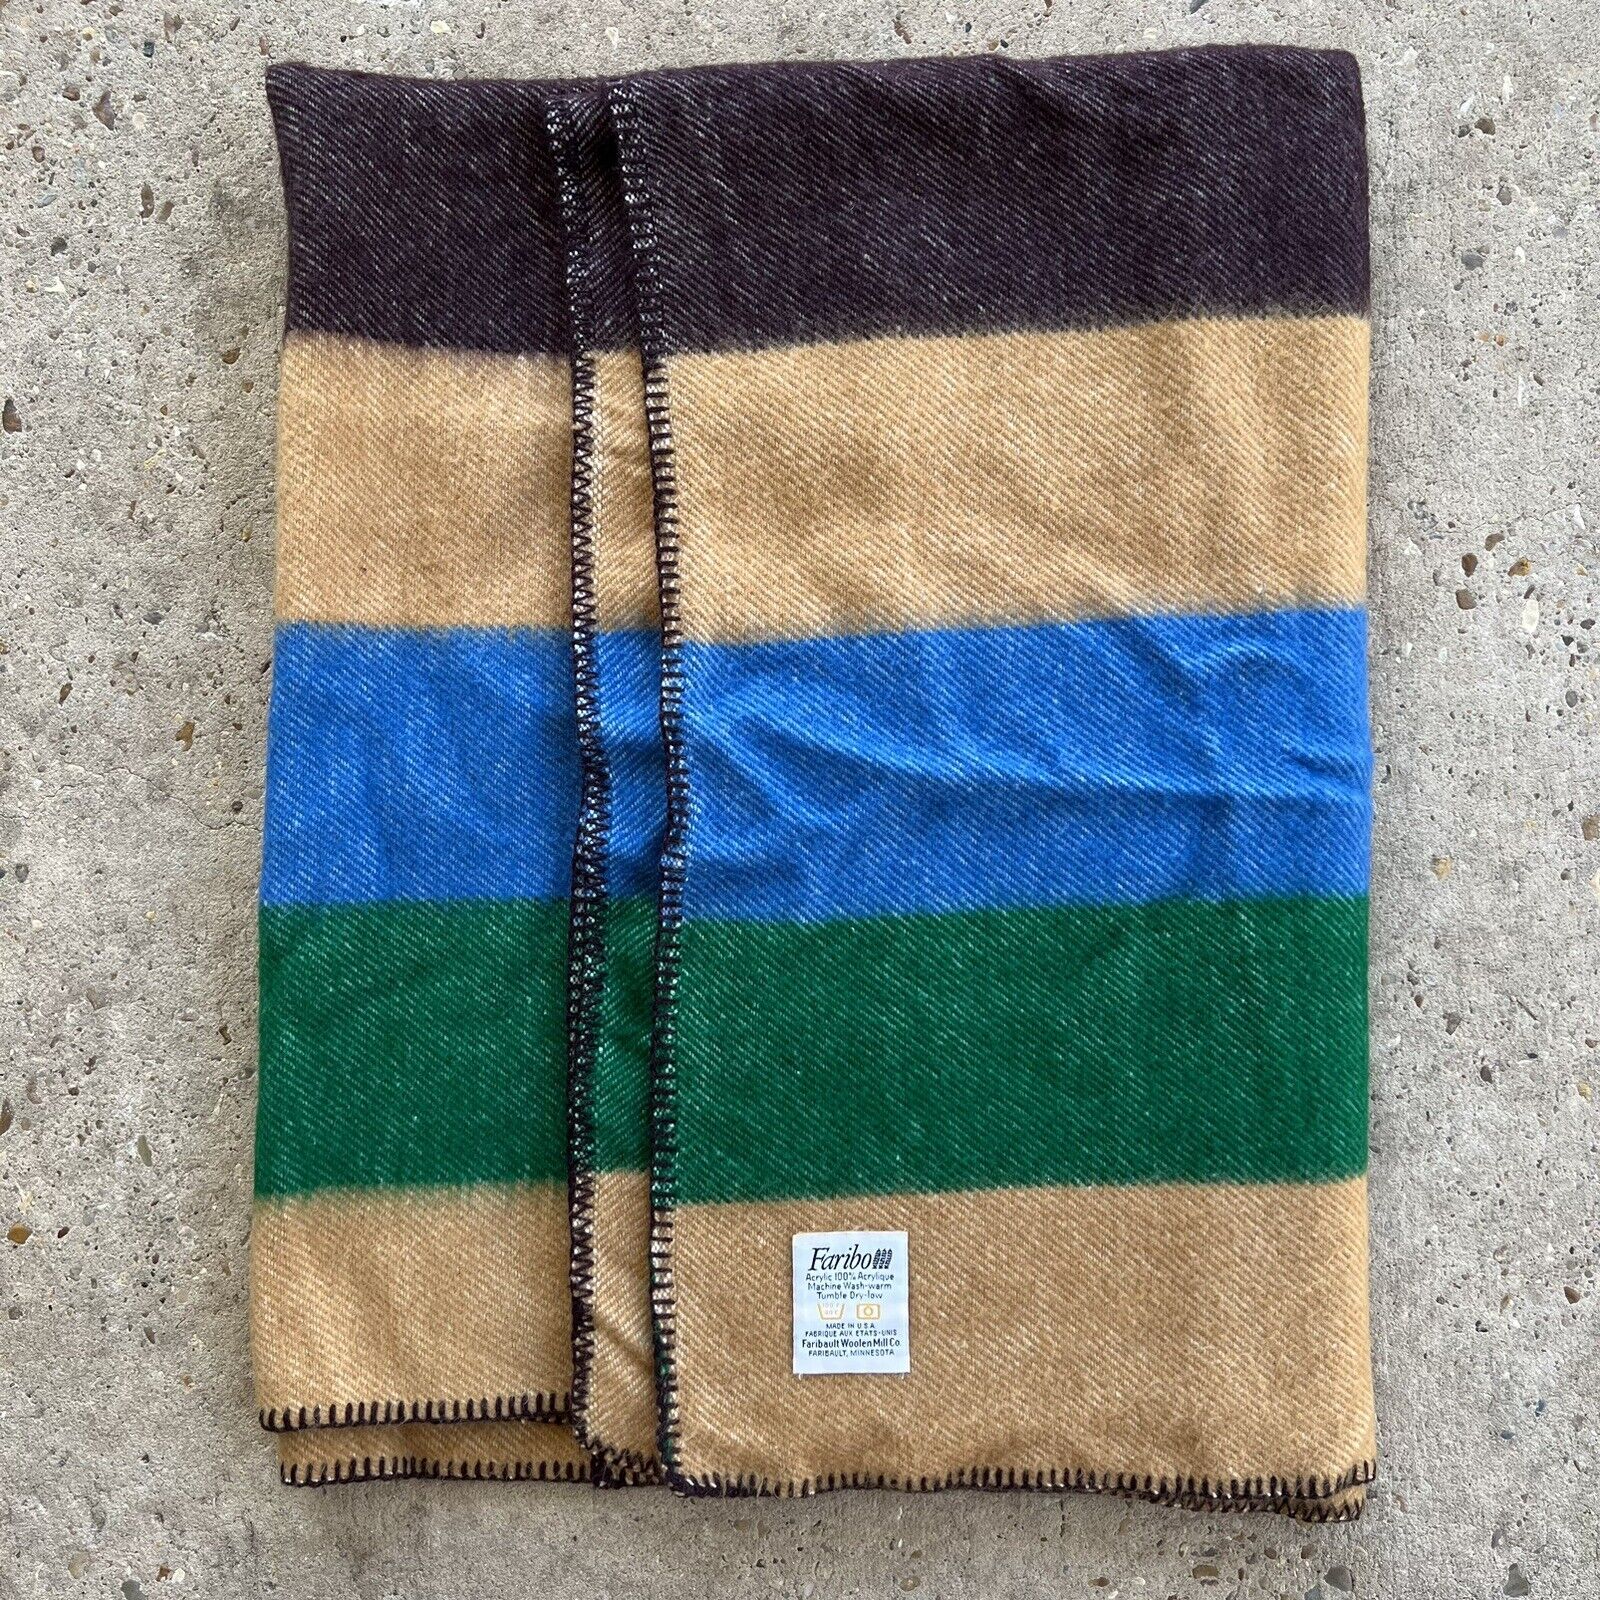 Faribo Faribault Woolen Mill Co. Acrylic Blanket Striped Vintage Retro 64x48